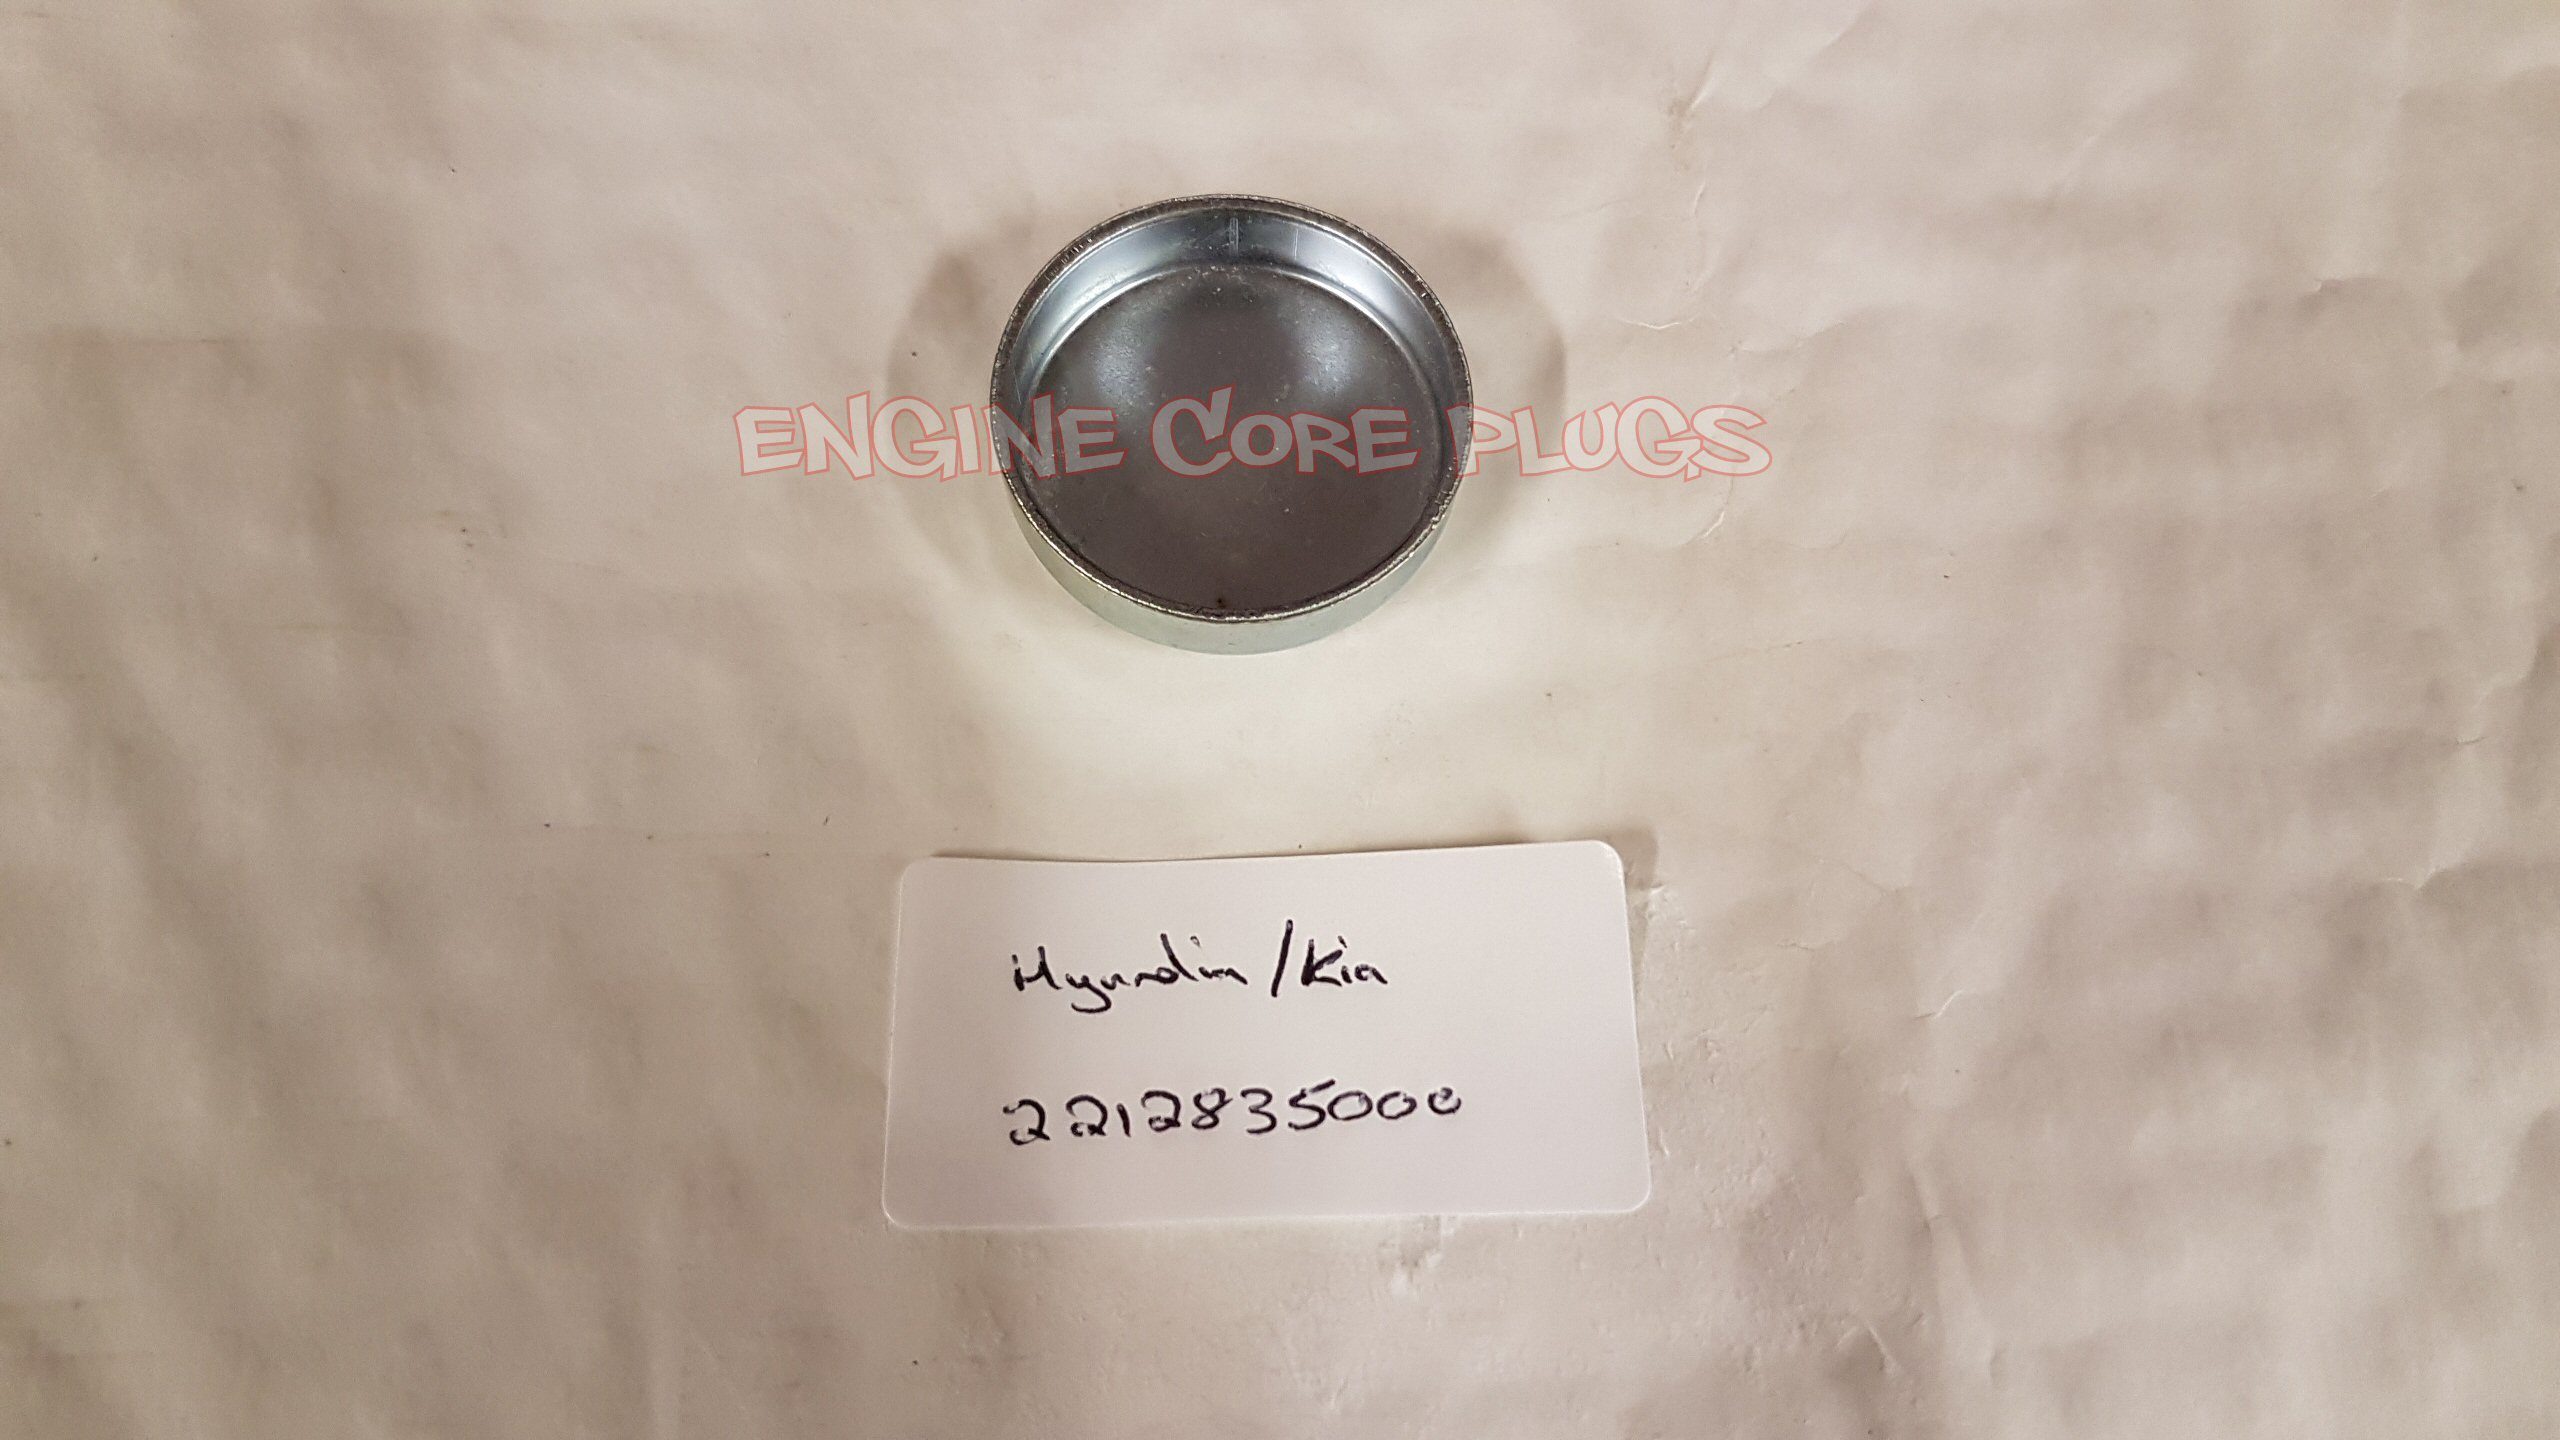 Hyundai Kia 221283500 automotive cup core plug